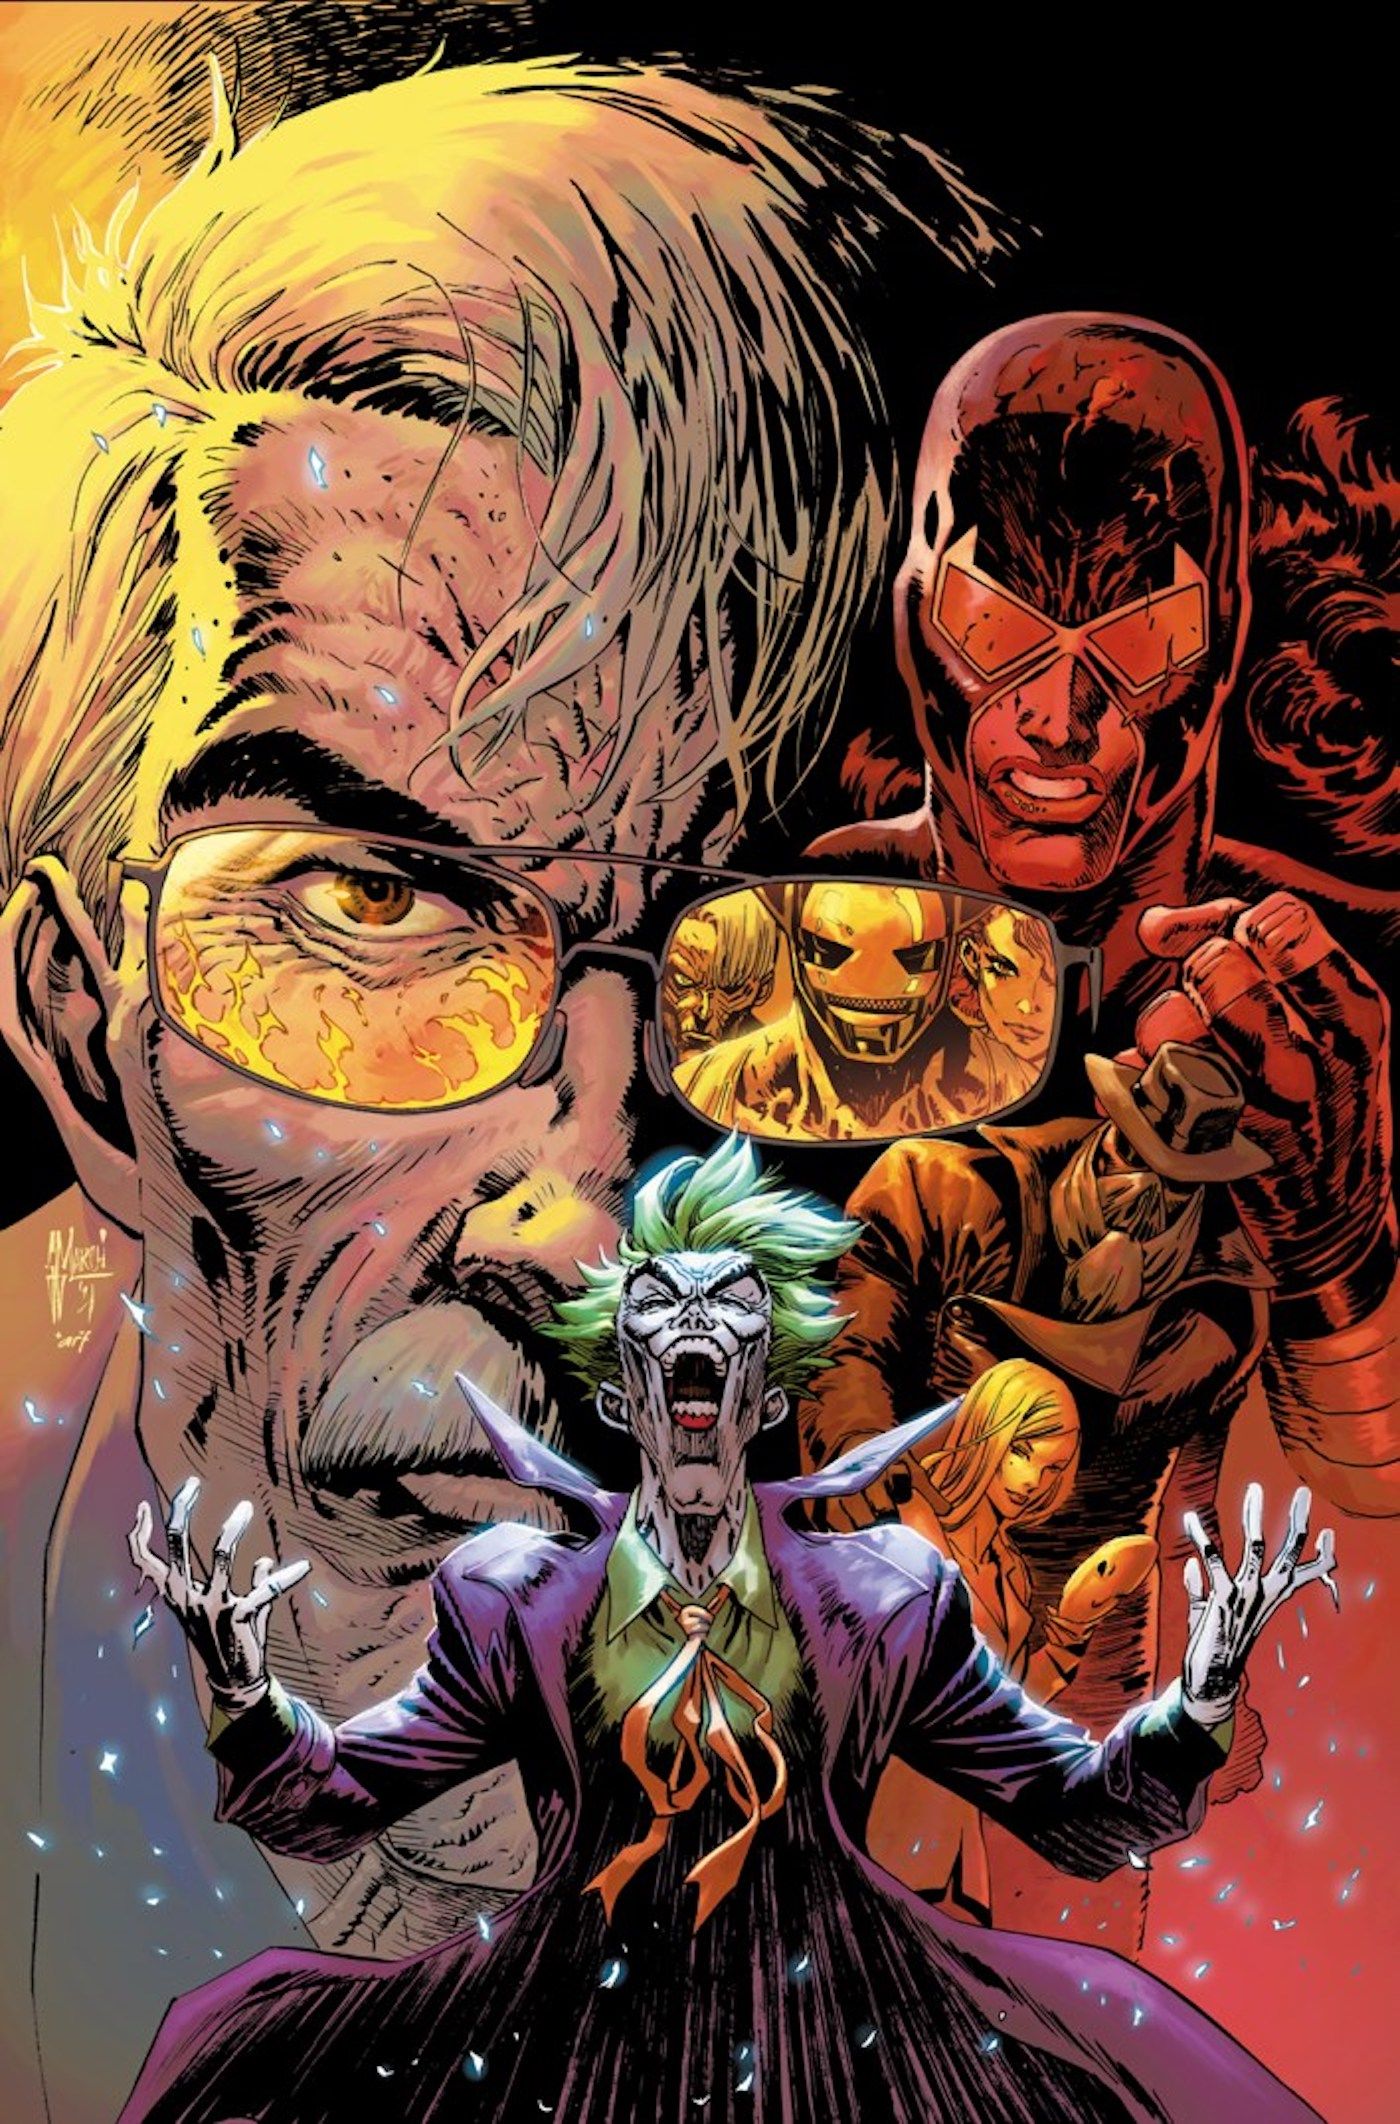 DC’s Joker Comic Series Ends This April